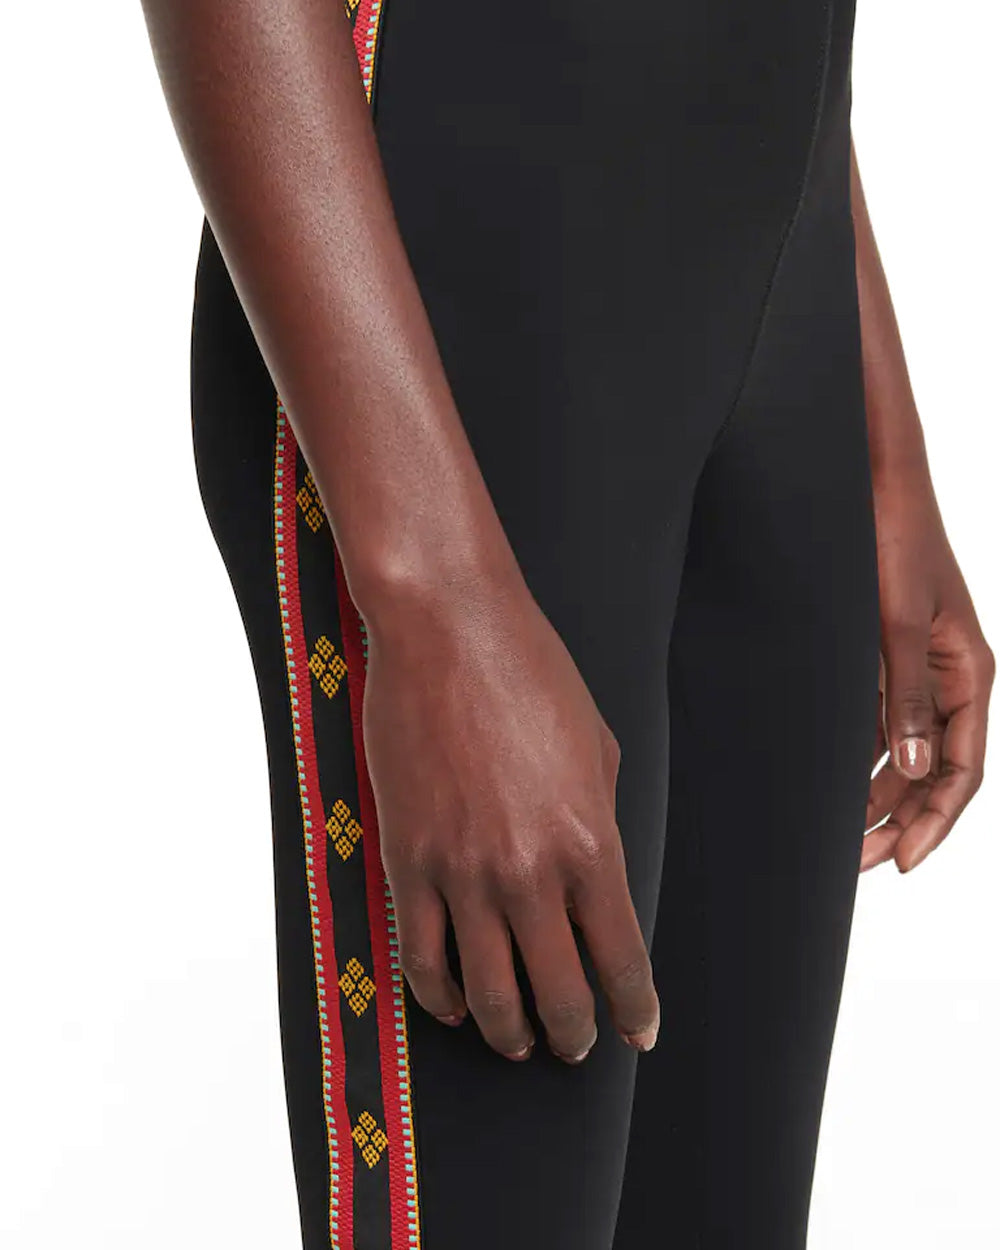 Black Jersey Legging with Side Detail